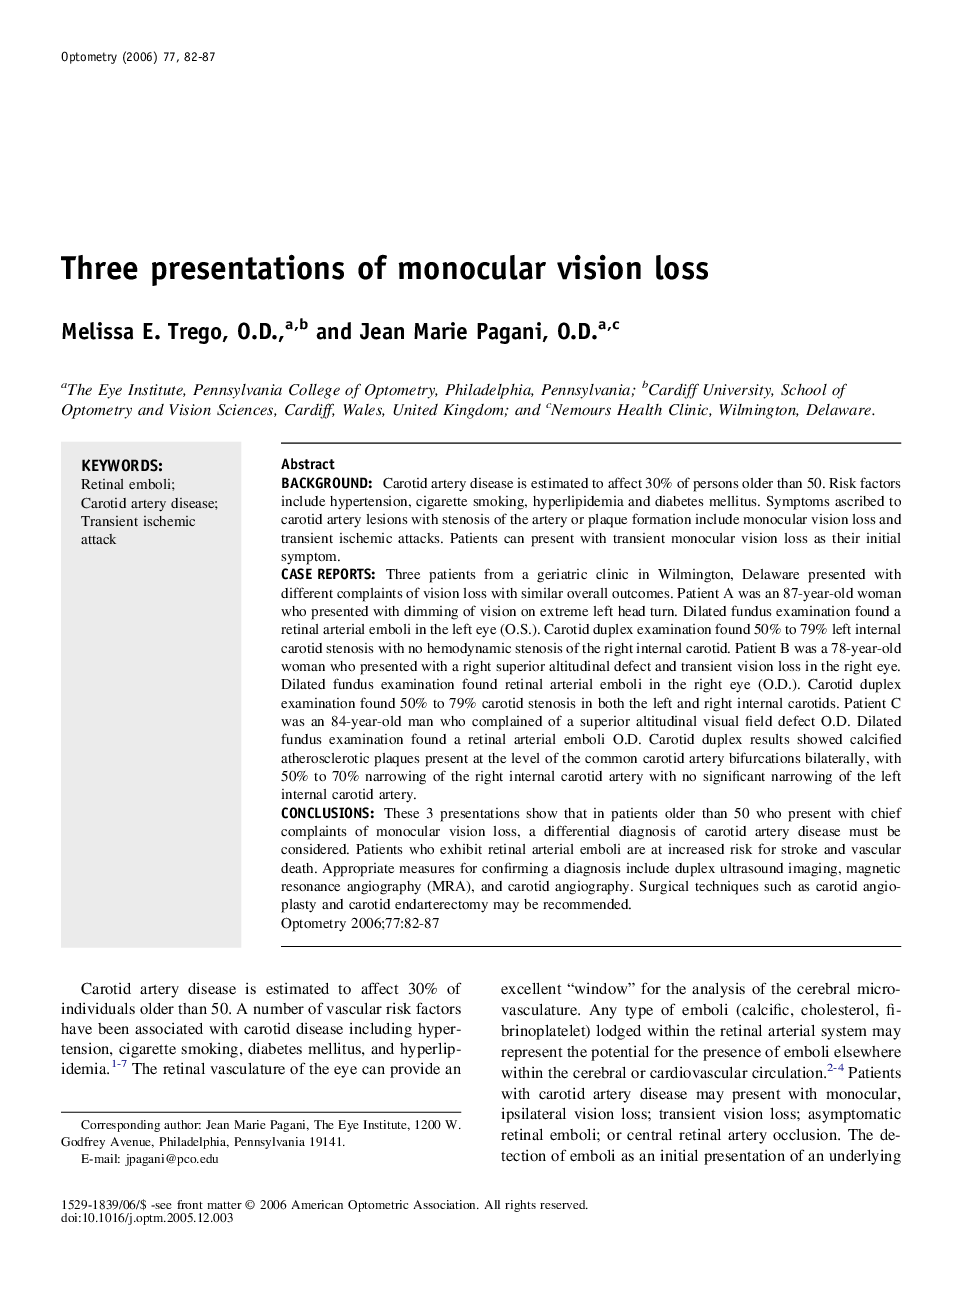 Three presentations of monocular vision loss